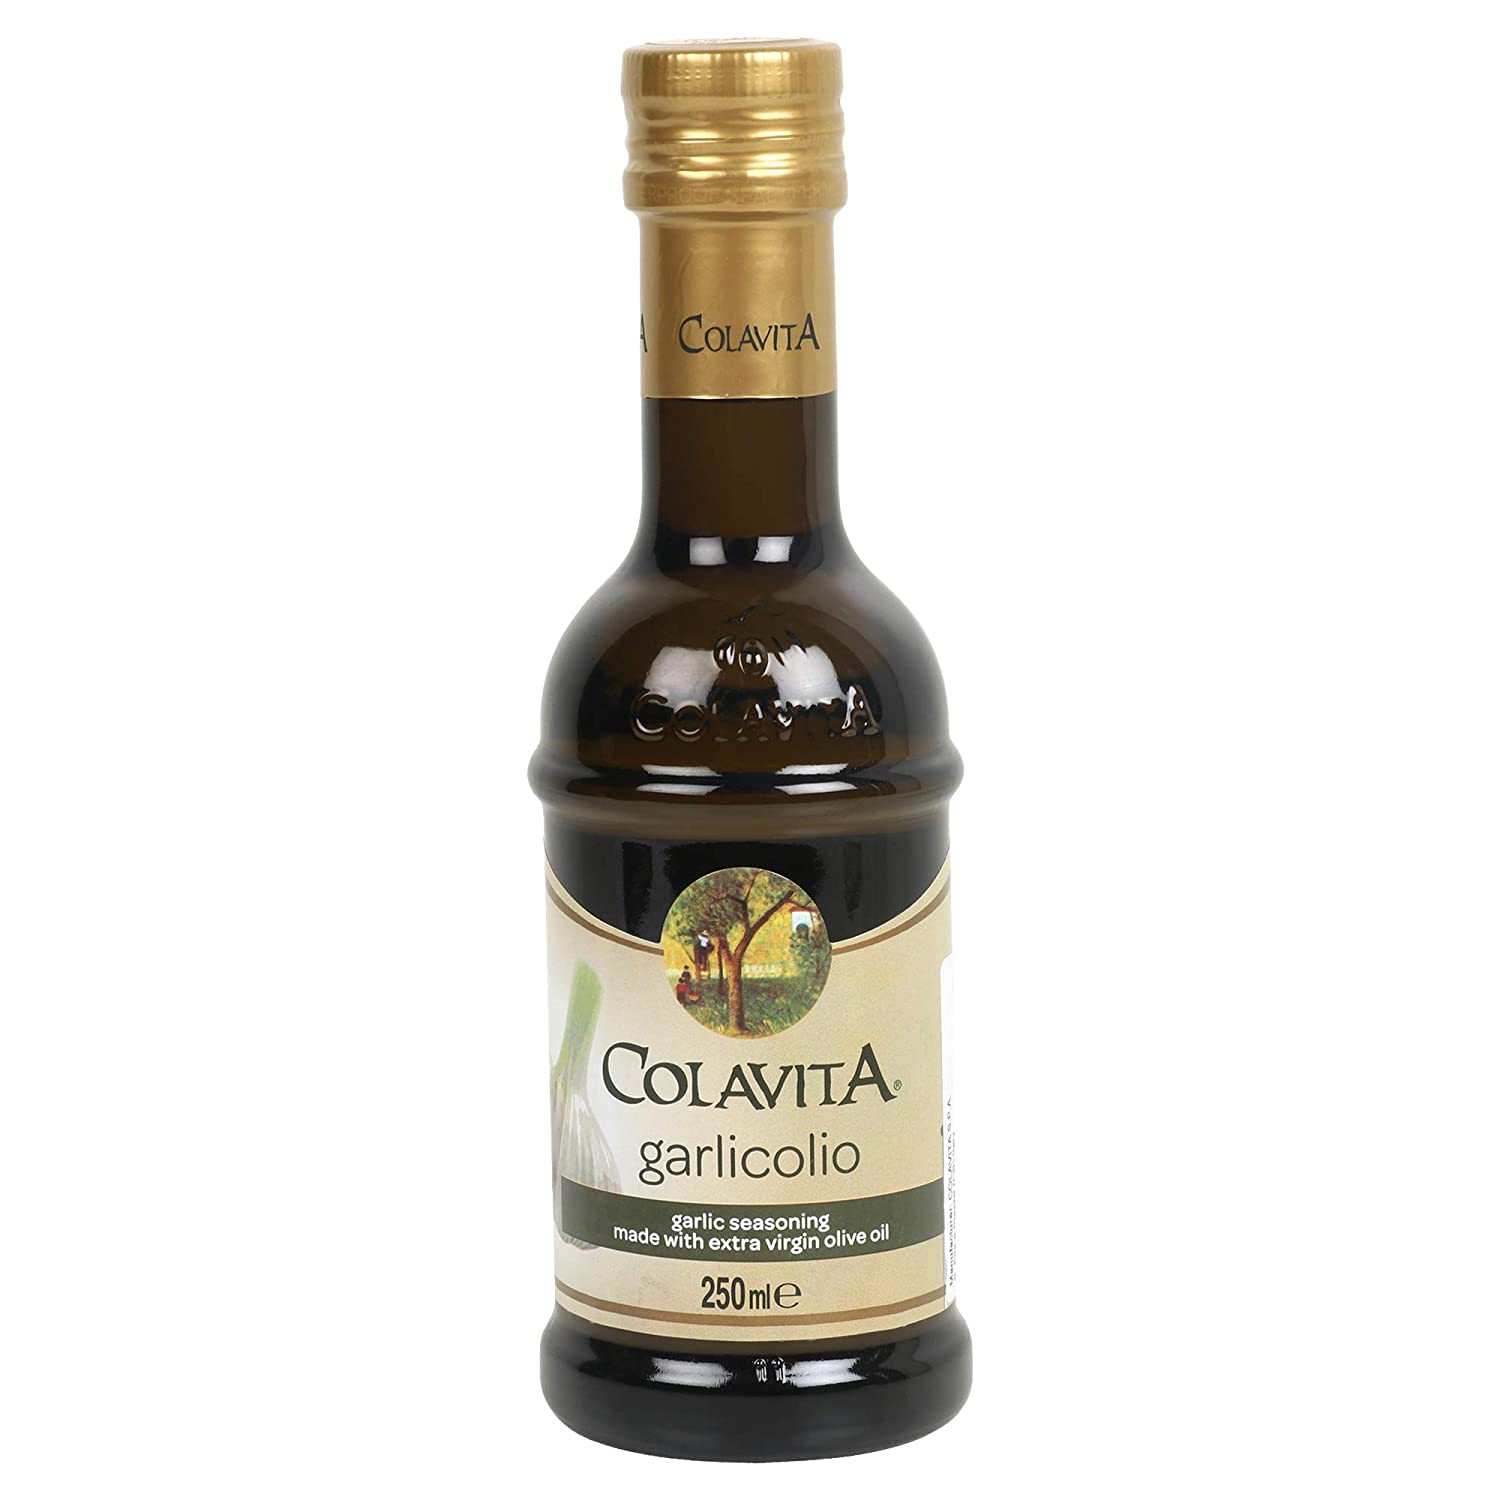 Buy Colavita Garlicolio Extra Virgin Olive Oil with Essence of Garlic